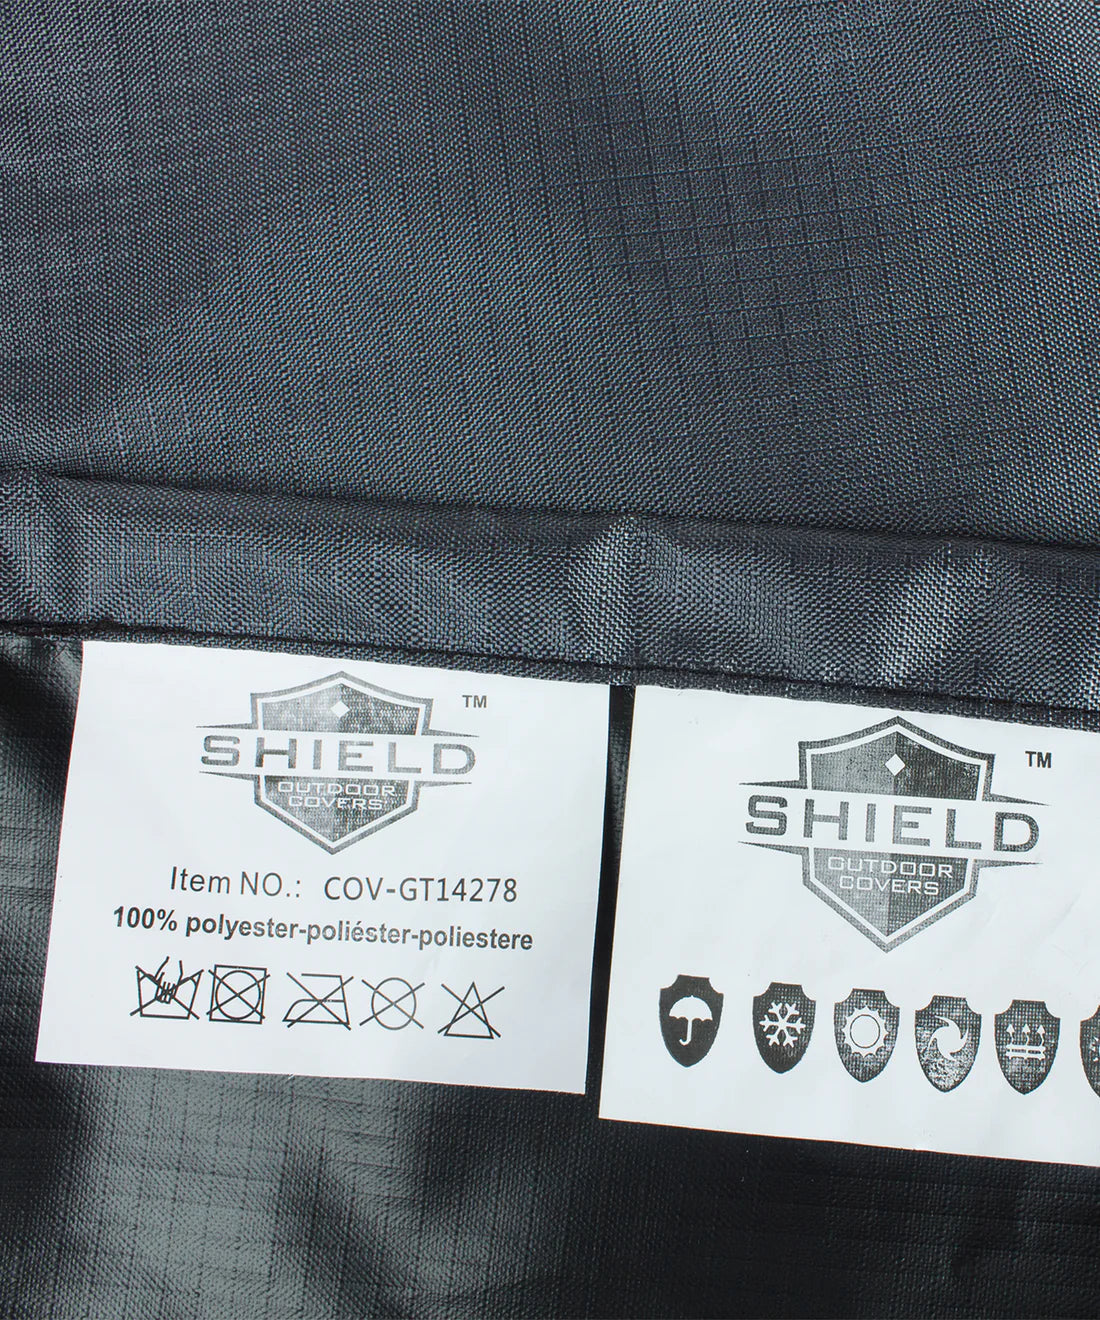 Shield - Lounge Cover Sun Bed - 70"W x 98.3"D x 17.5"H Gold - COV-GOSB